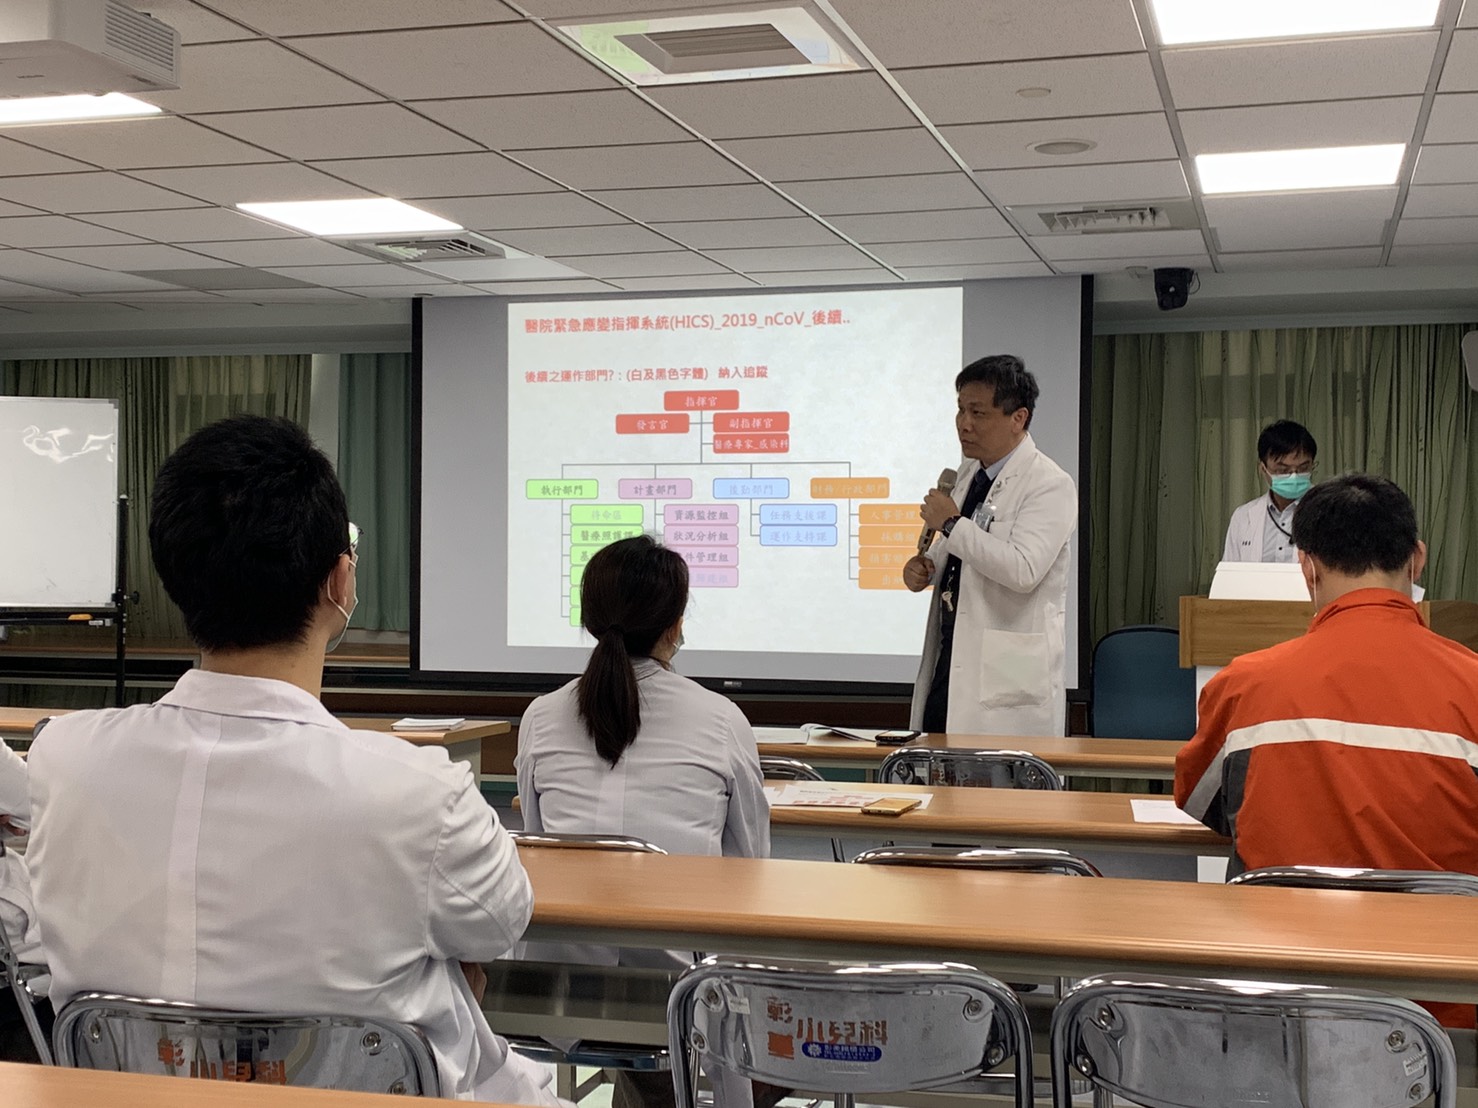 Dr. Chen Mu-kuan on COVID-19